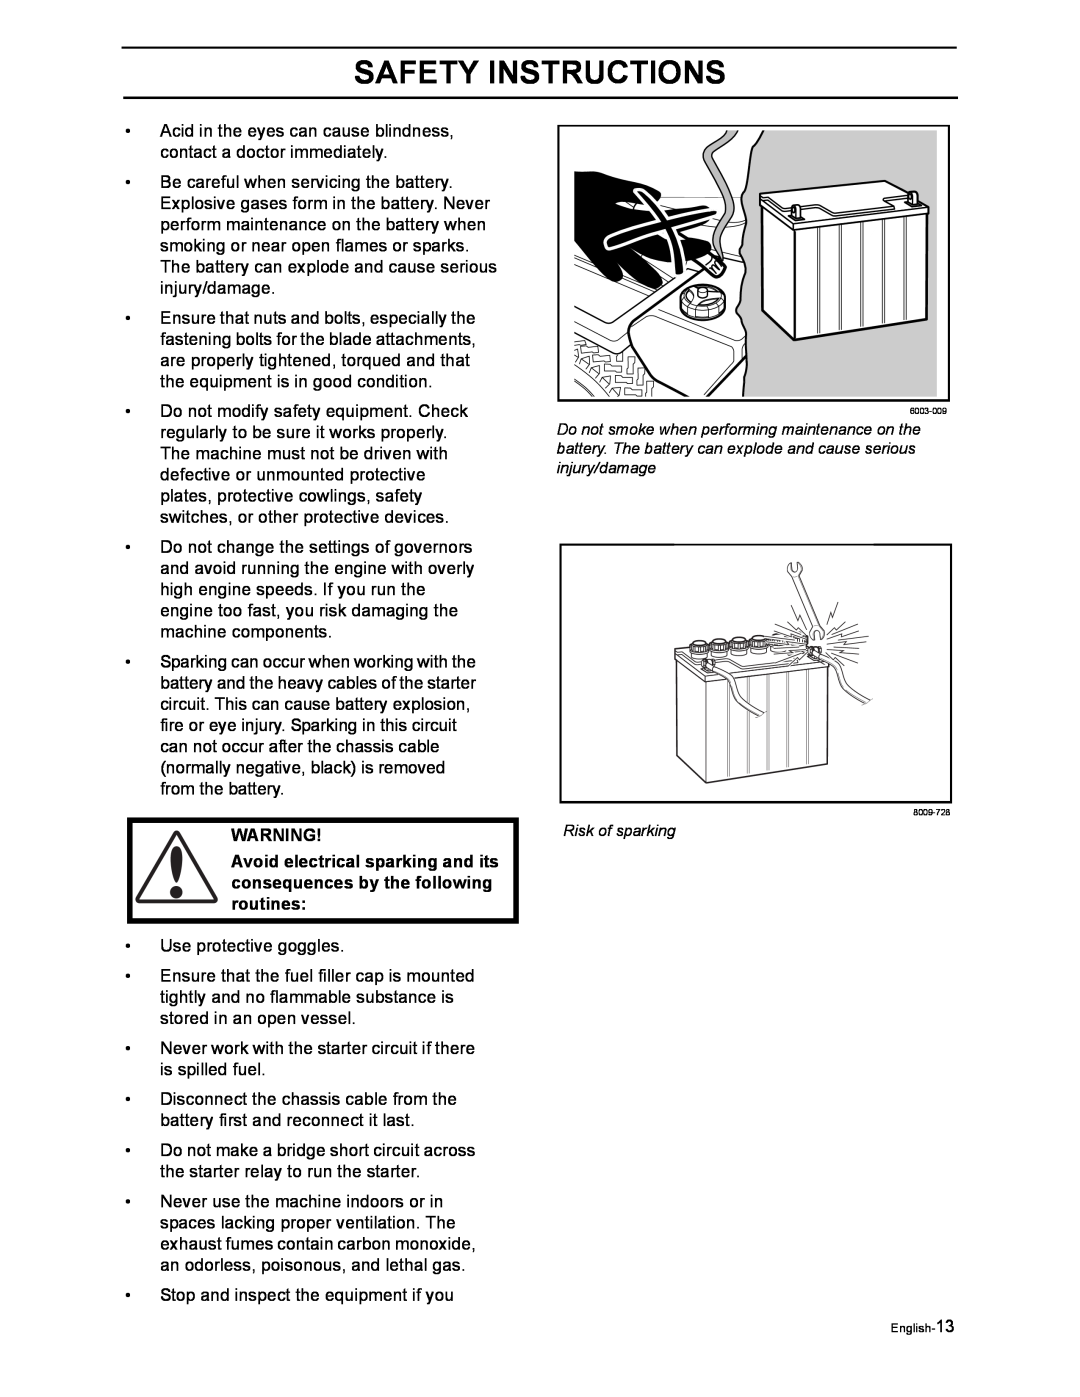 Husqvarna Z4822 manual Safety Instructions, Risk of sparking, English-13 